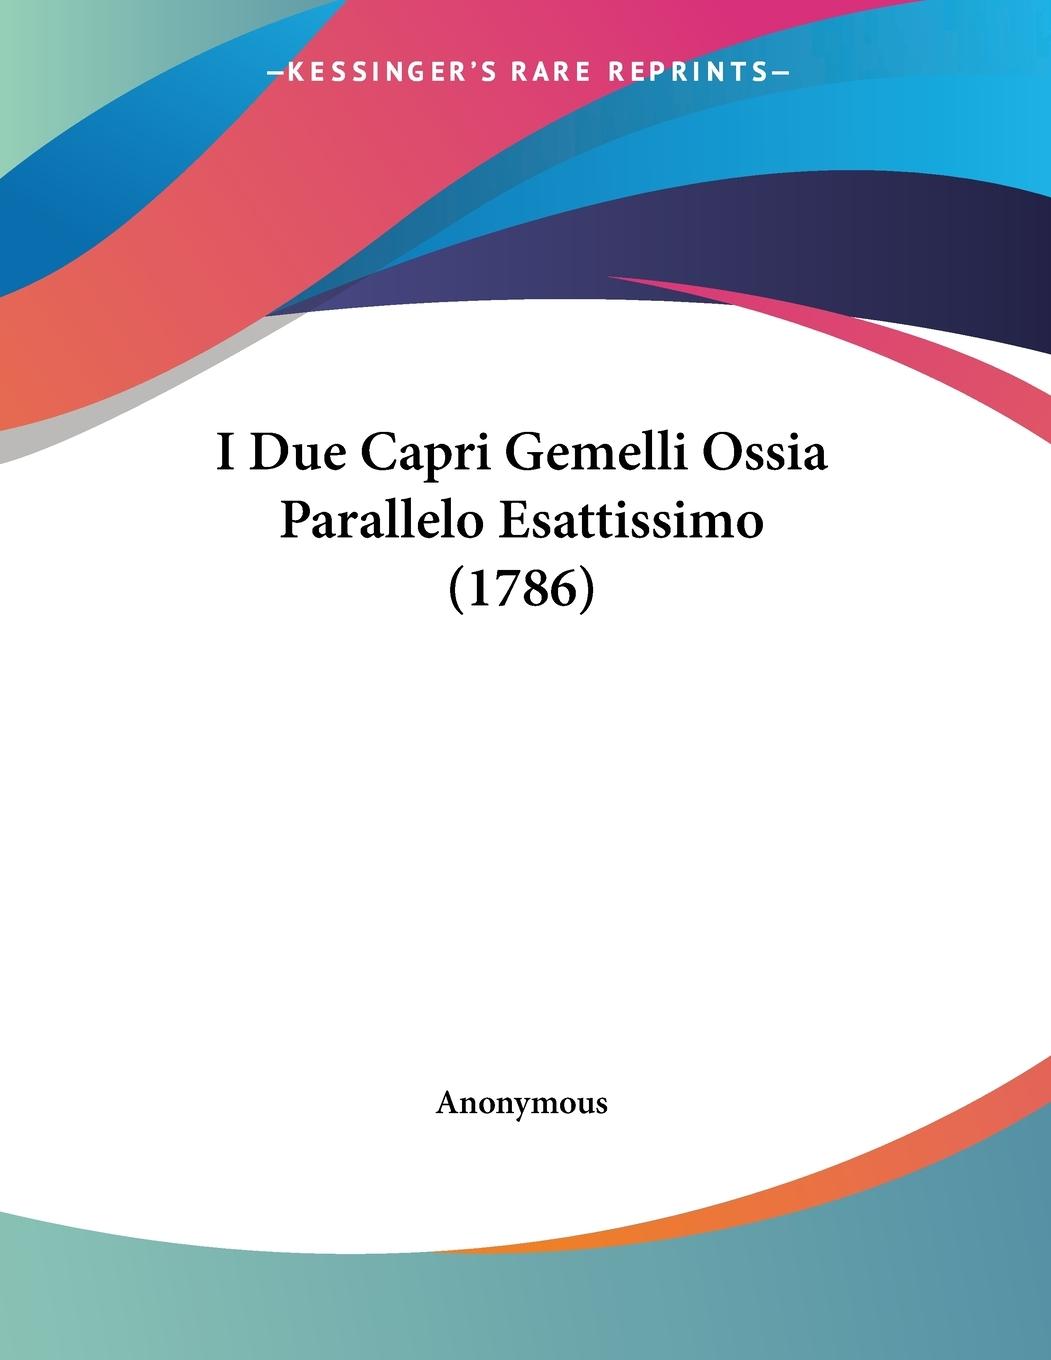 I Due Capri Gemelli Ossia Parallelo Esattissimo (1786) - Anonymous